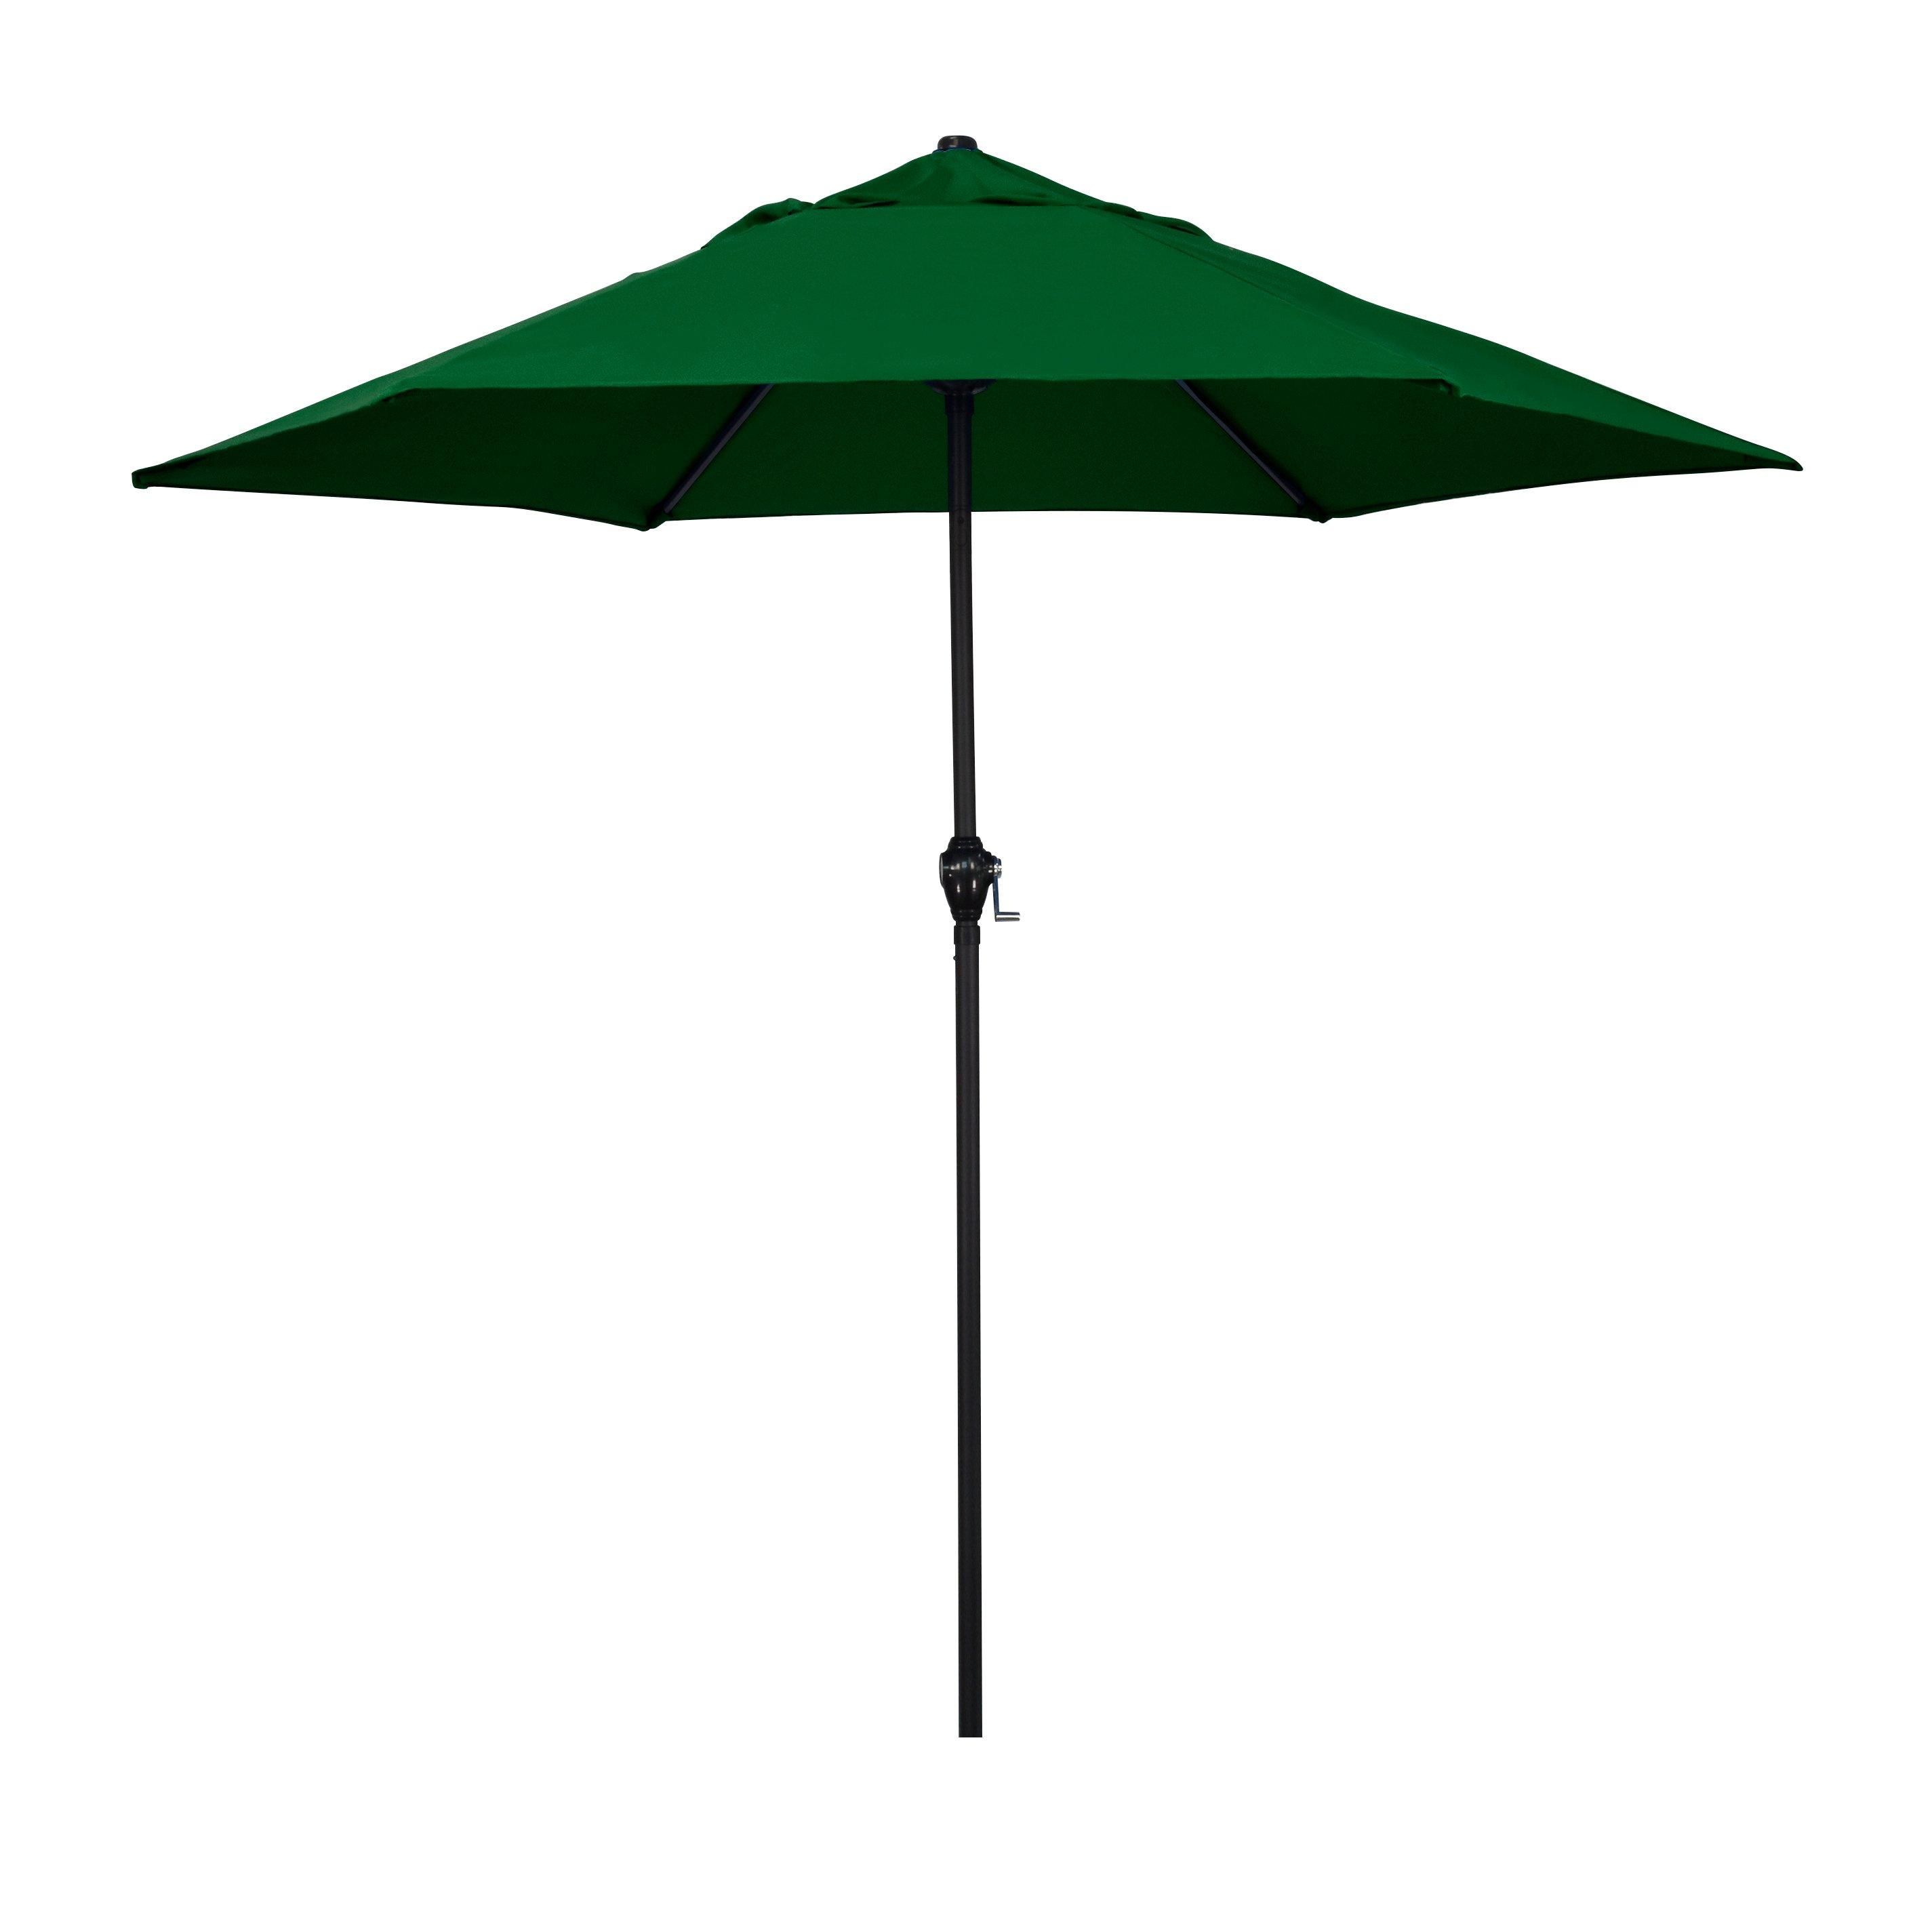 Market Steel 9 Umbrella  Lime Green